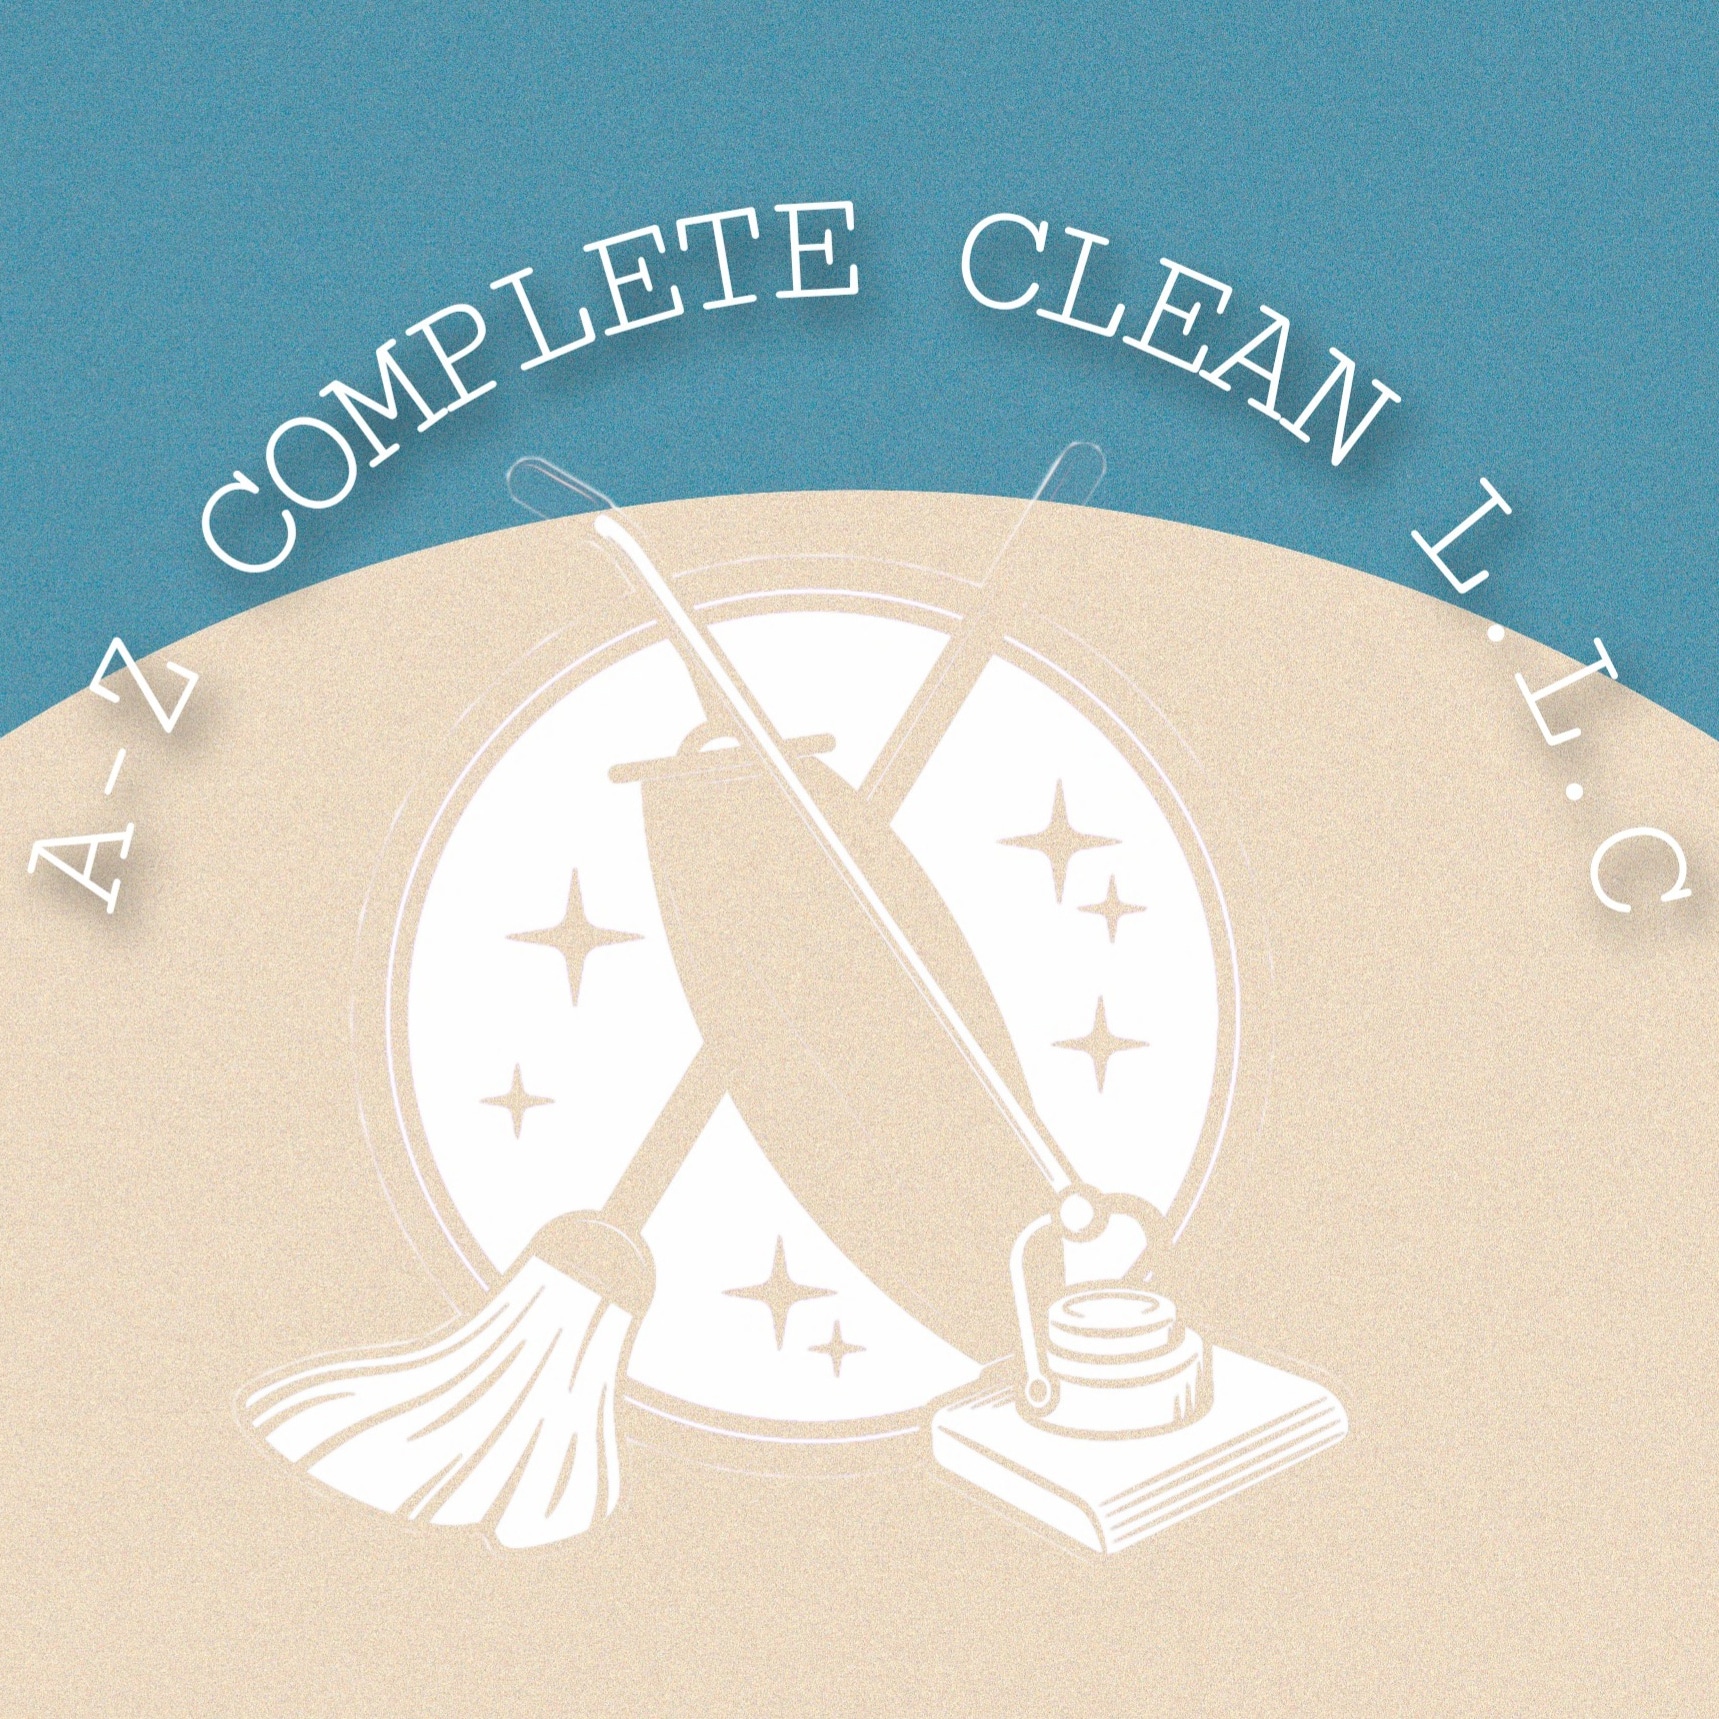 A-Z Complete Clean L.L.C. 1500 Country Lake Cir, Goshen Ohio 45122